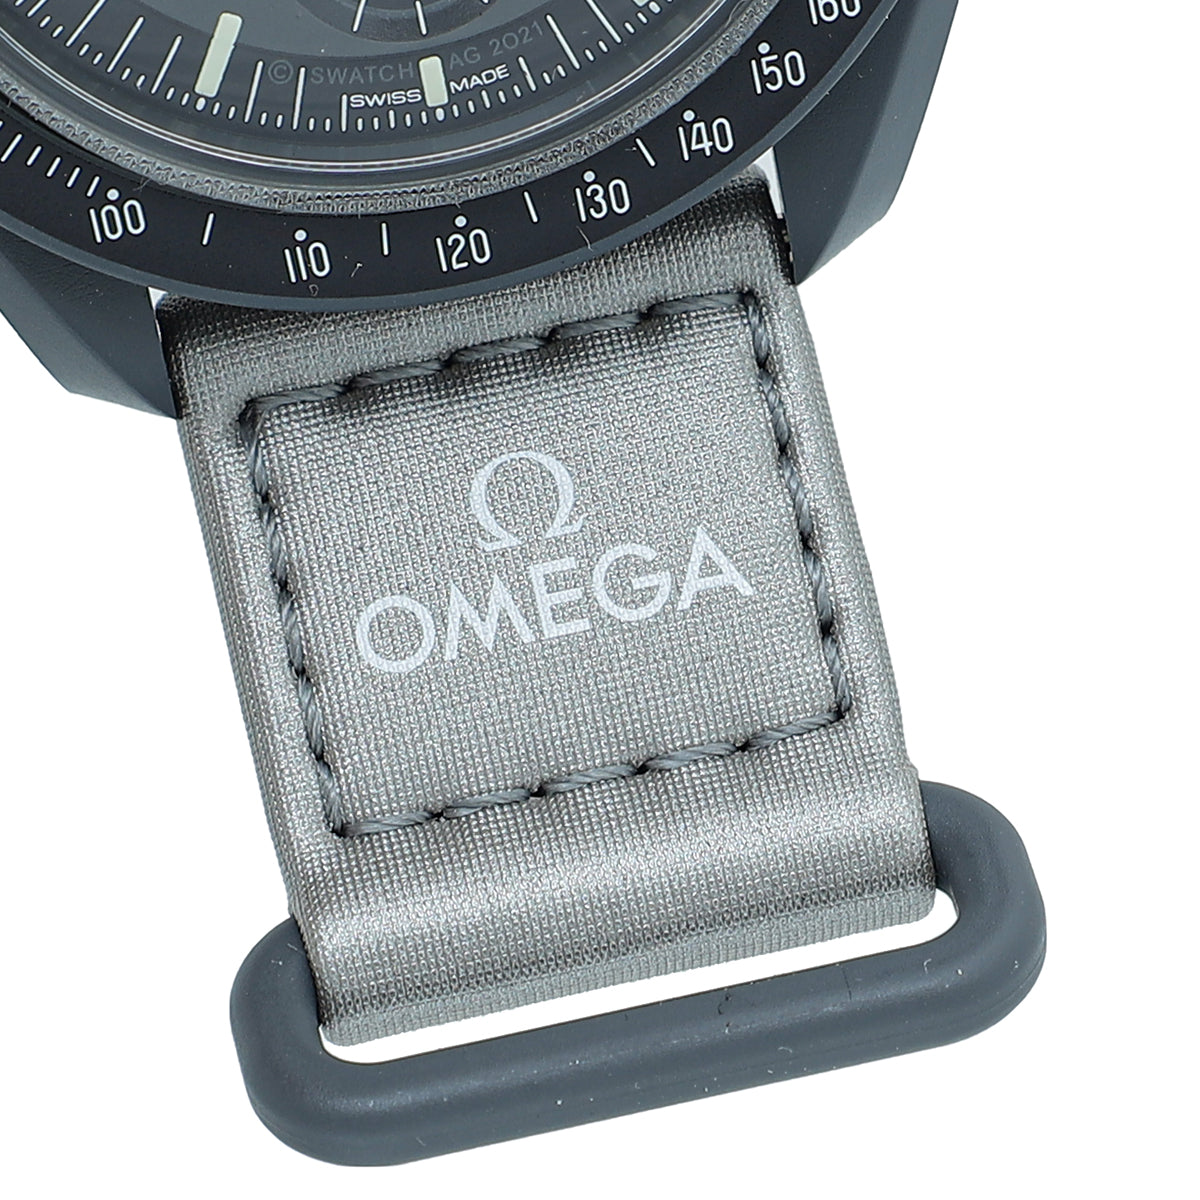 Omega Bicolor X Swatch Speedmaster Moonswatch Mission to Mercury Quartz 41mm Watch